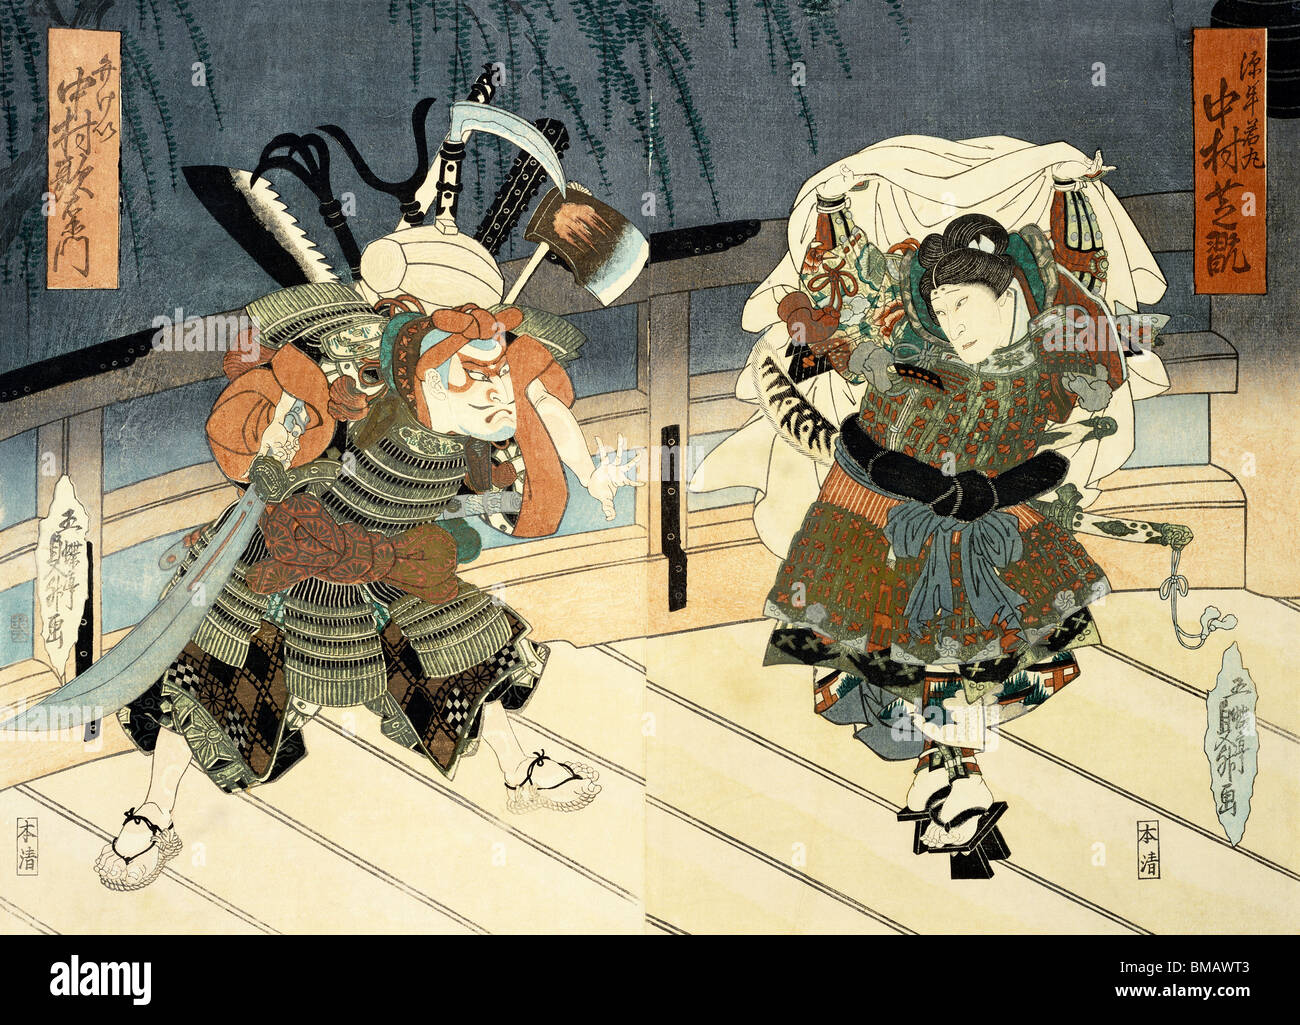 Two Actors in Performance, by Utagawa Kunimasu. Woodblock Print. Japan, 1837. Stock Photo